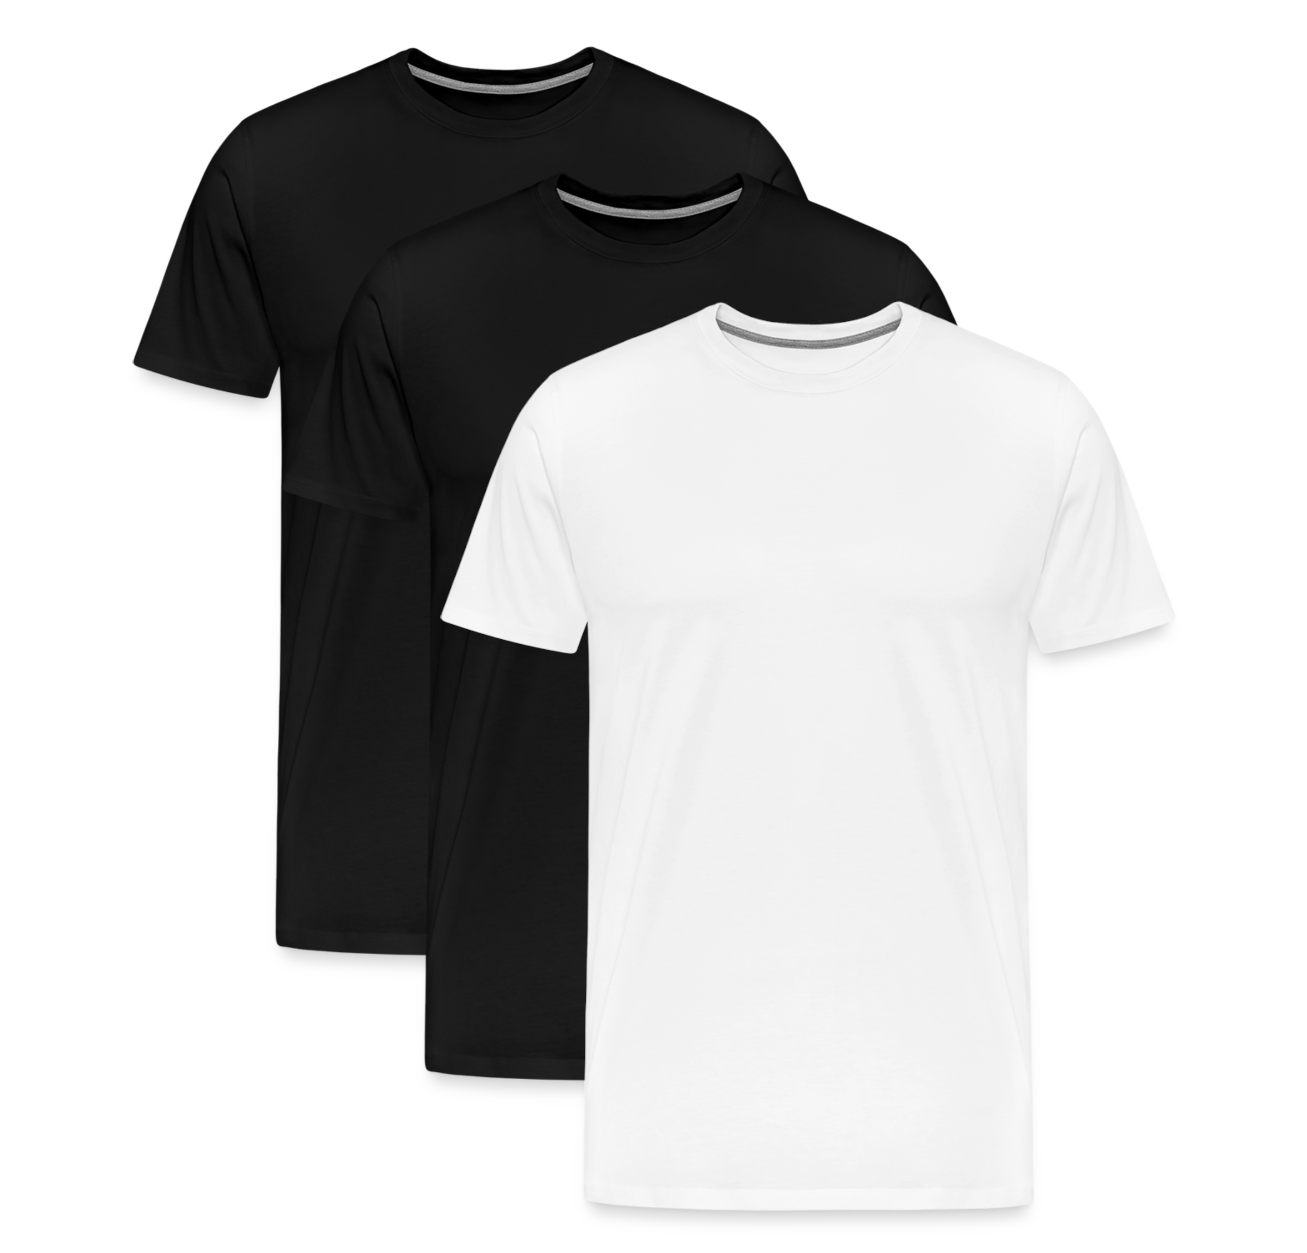 Fluent Tee Variety 3-Pack (Size S) - Men's Premium T-Shirt from fluentclothing.com